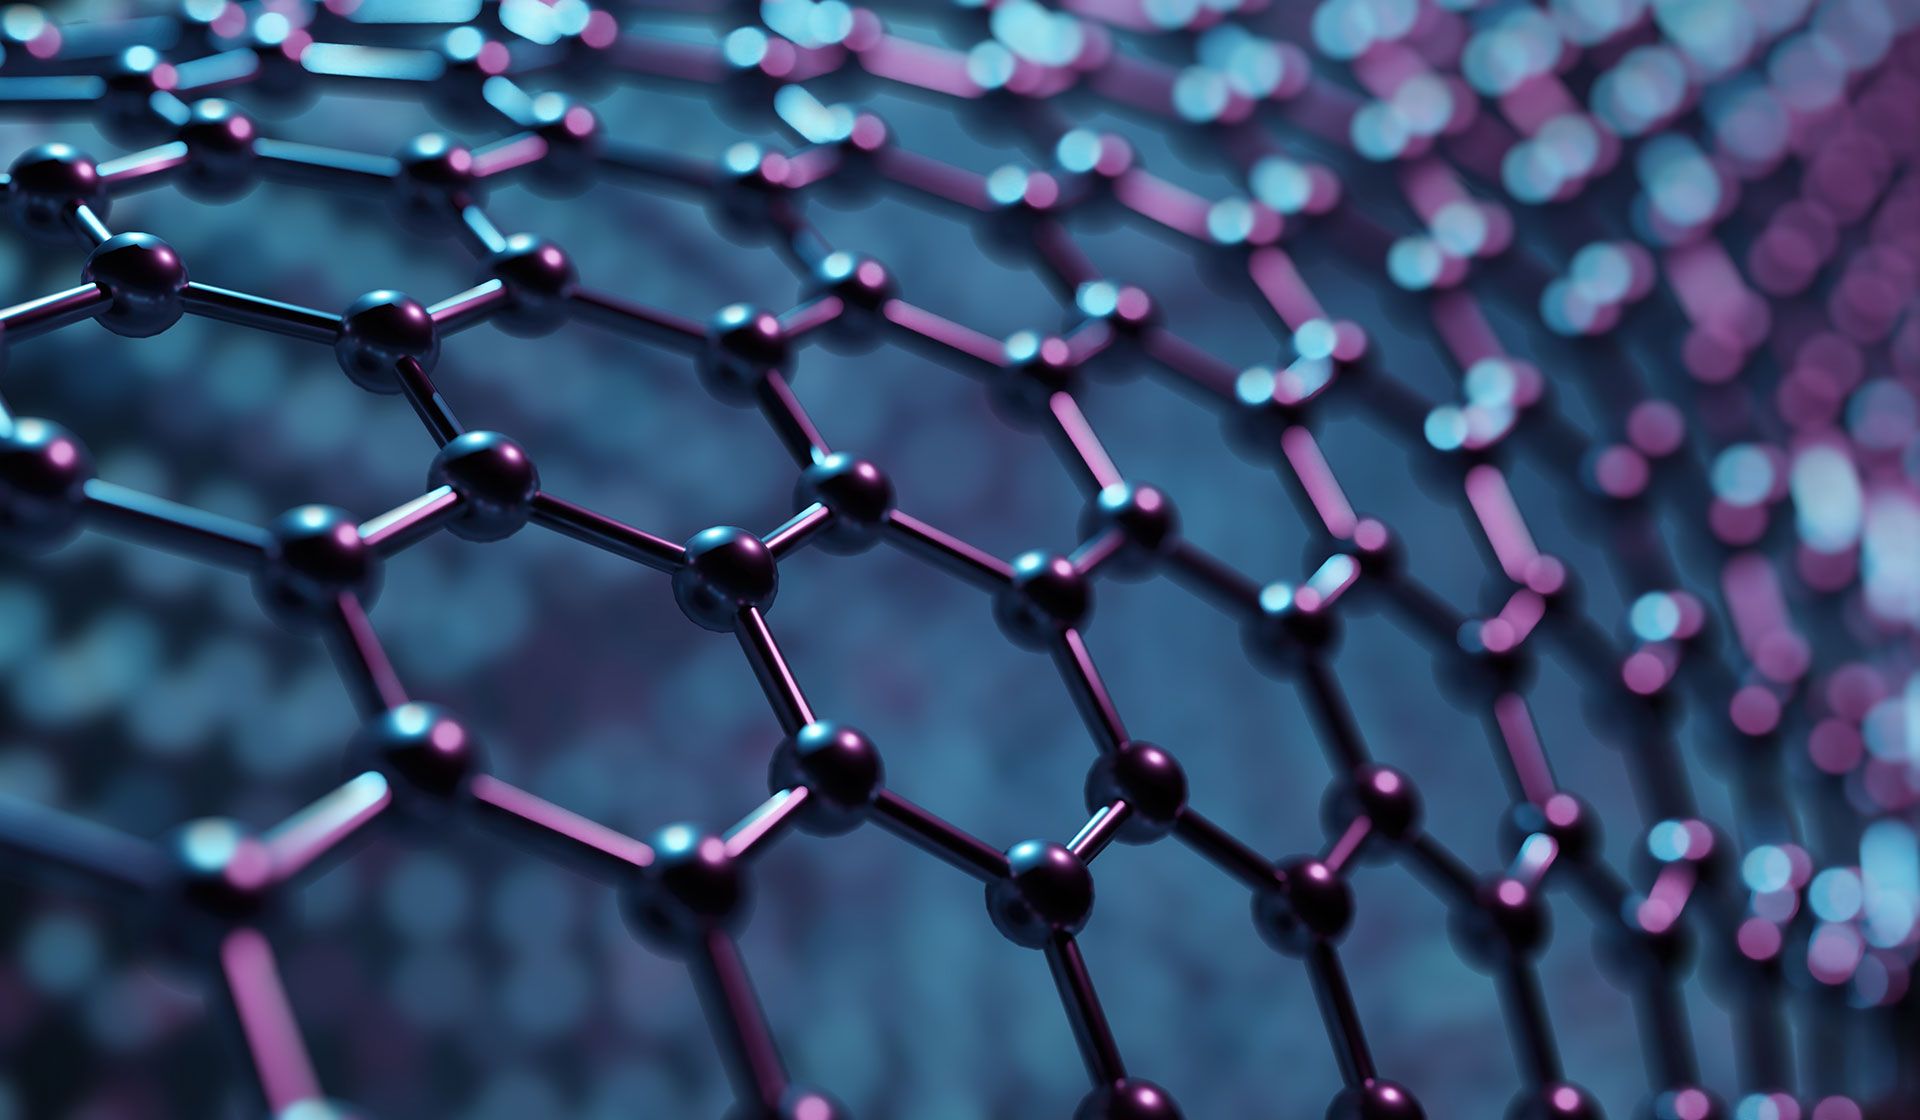 Structure of hexagonal nano-material. Nanotechnology concept.